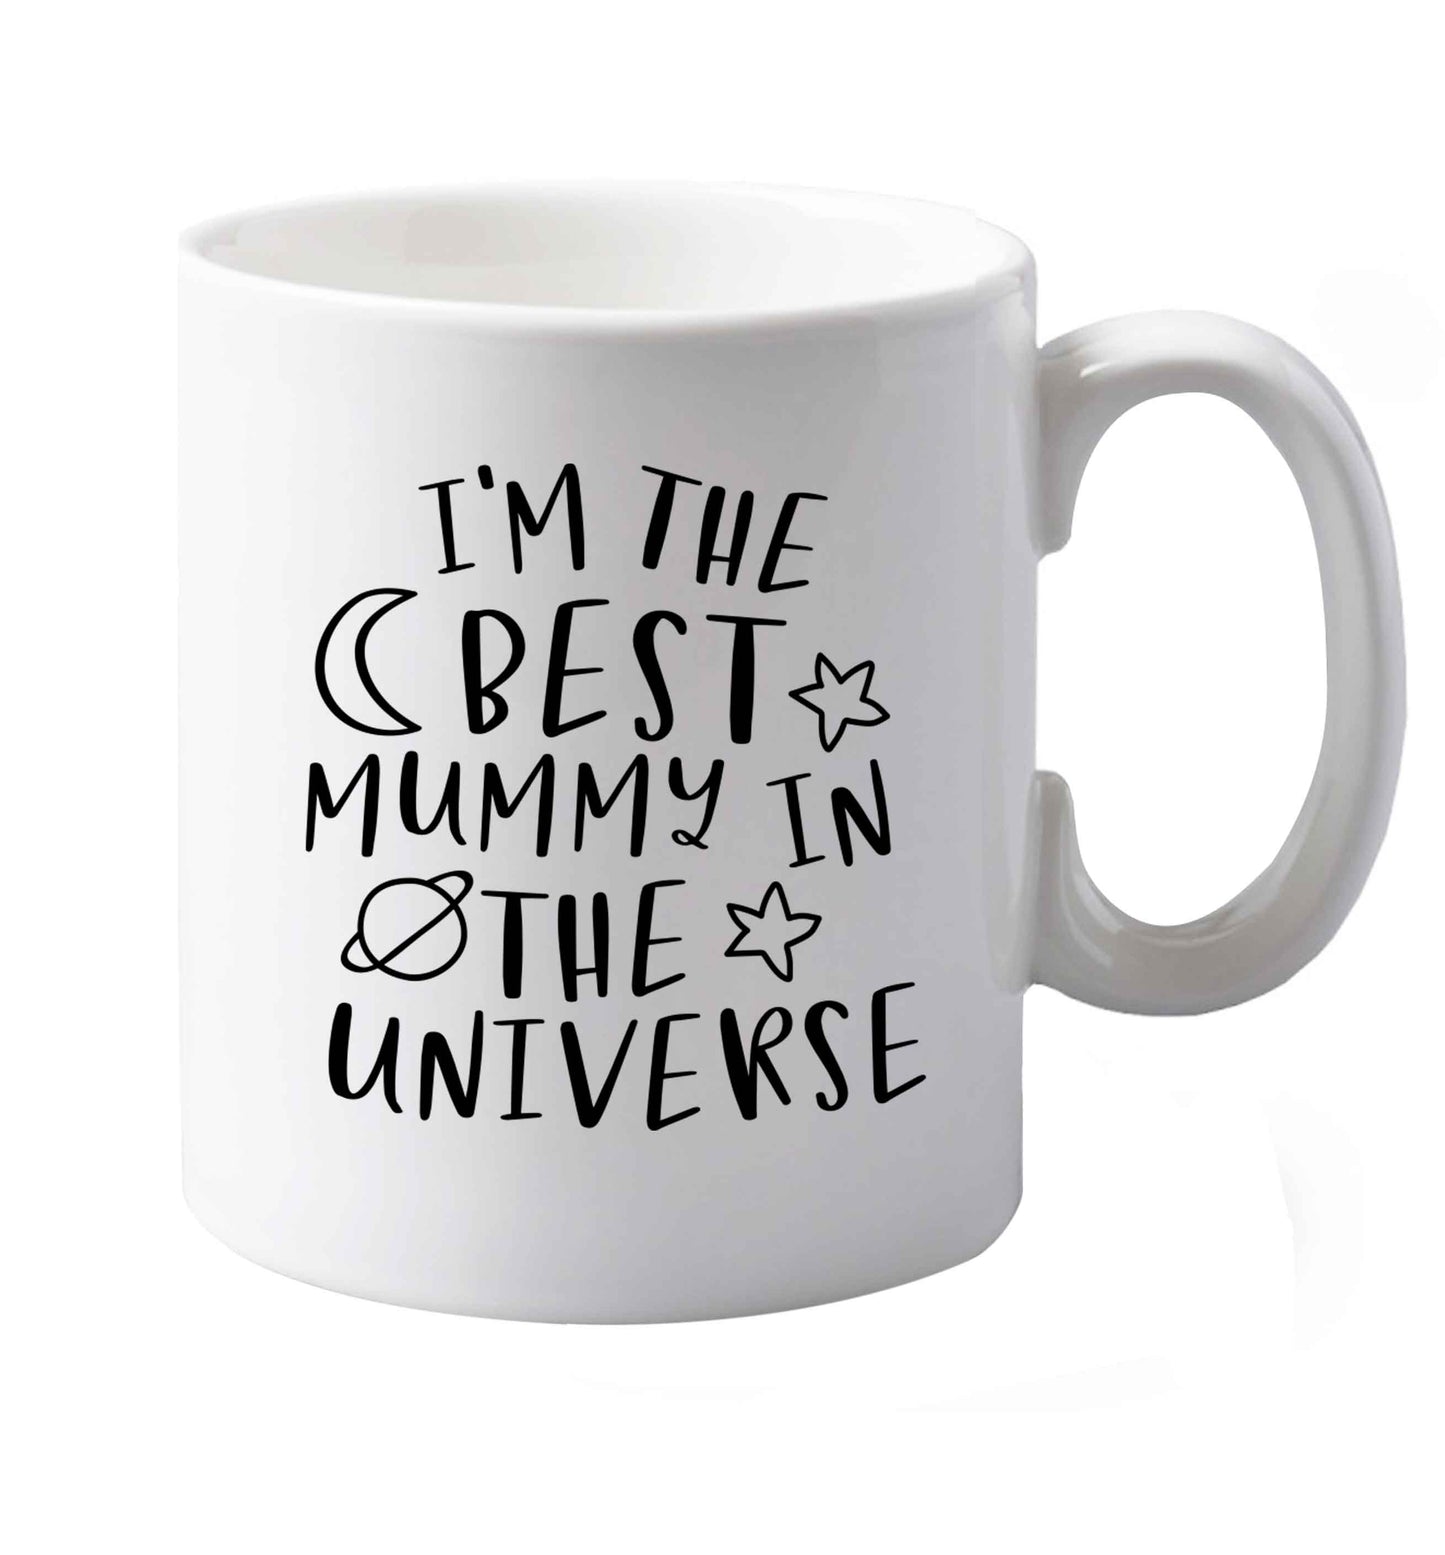 10 oz I'm the best mummy in the universe ceramic mug both sides